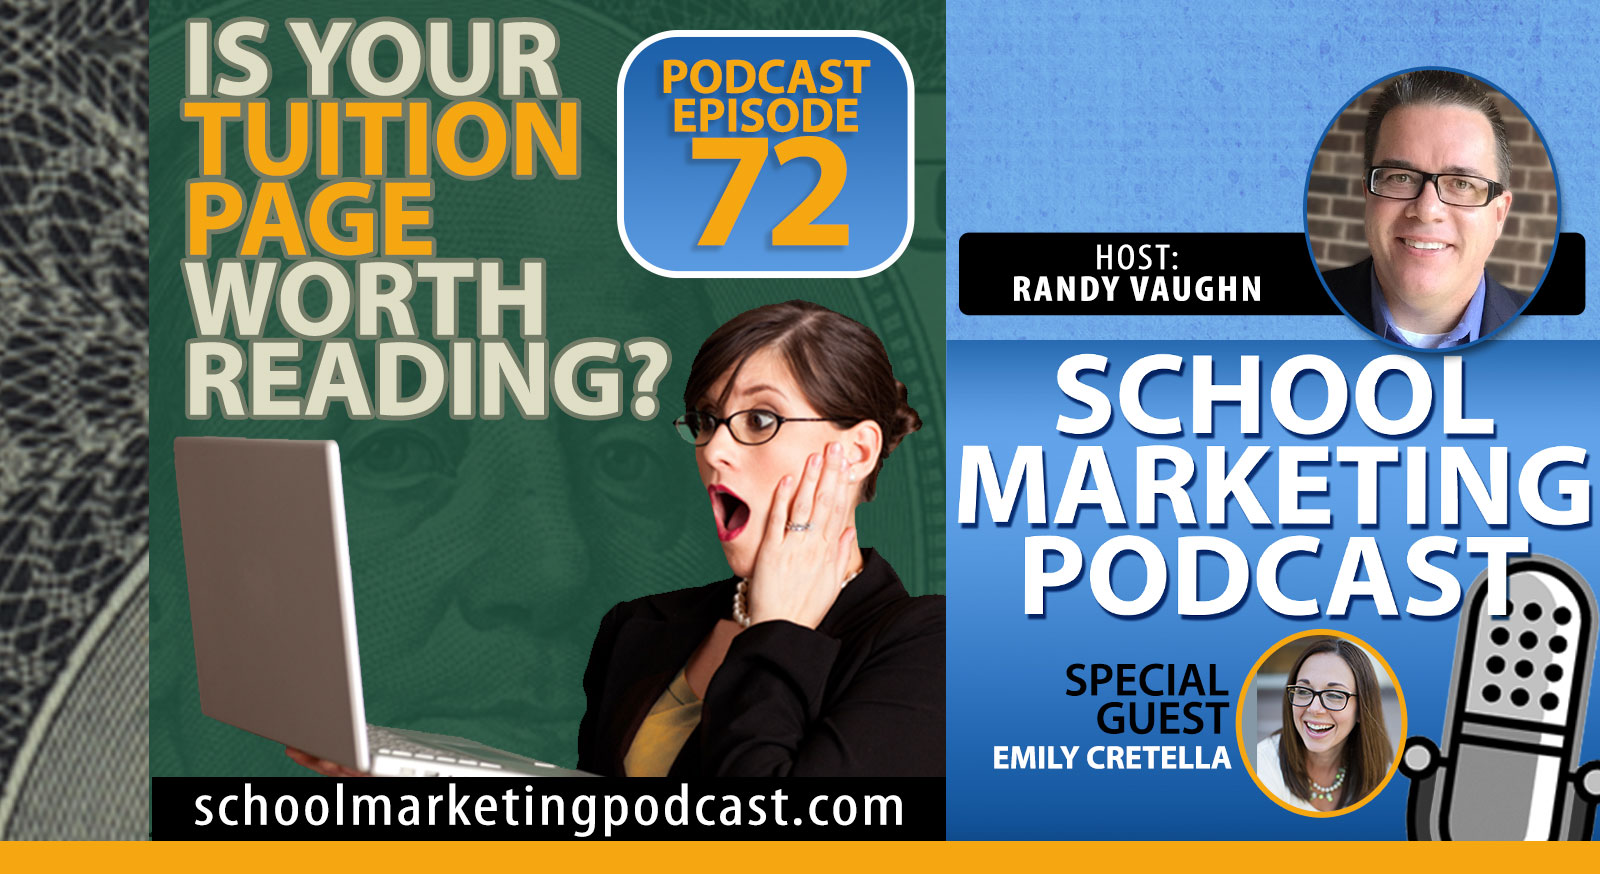 Emily Cretella (@emilycretella) asks if your tuition page is worth reading (School Marketing Podcast #72)